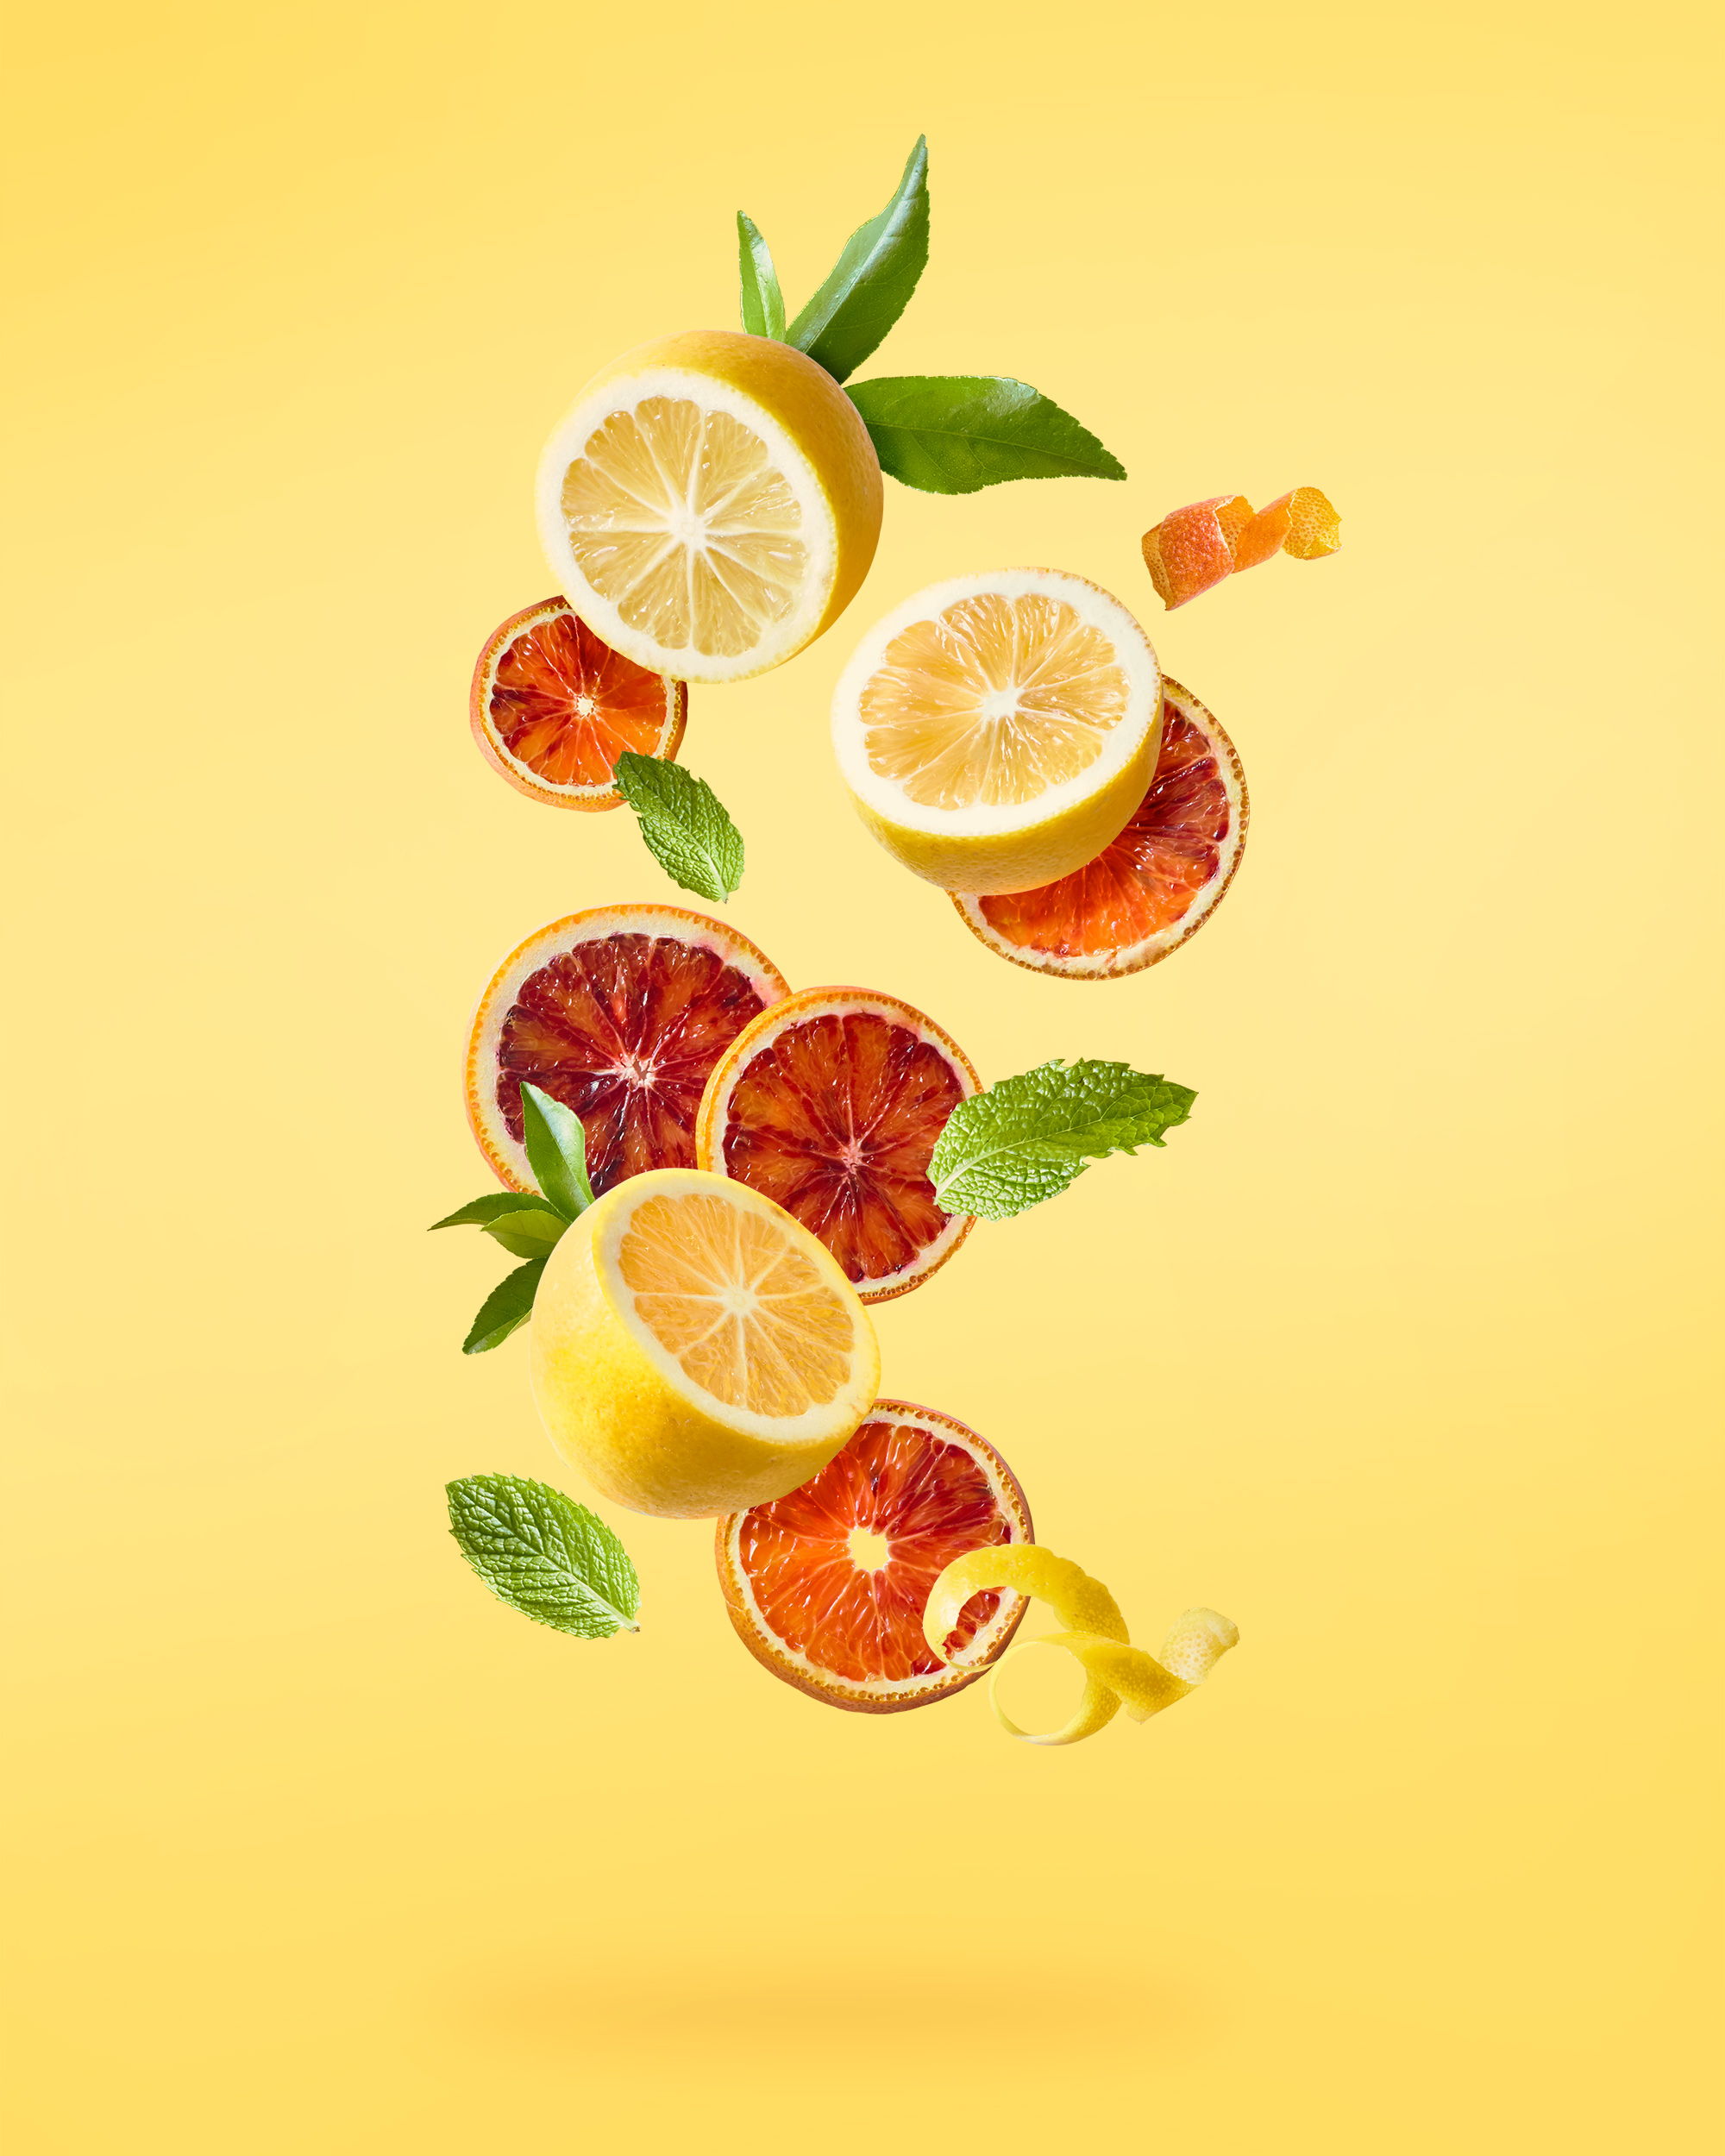 Annabelle_Breakey_Food_Photography_Citrus_Fruit-Composite